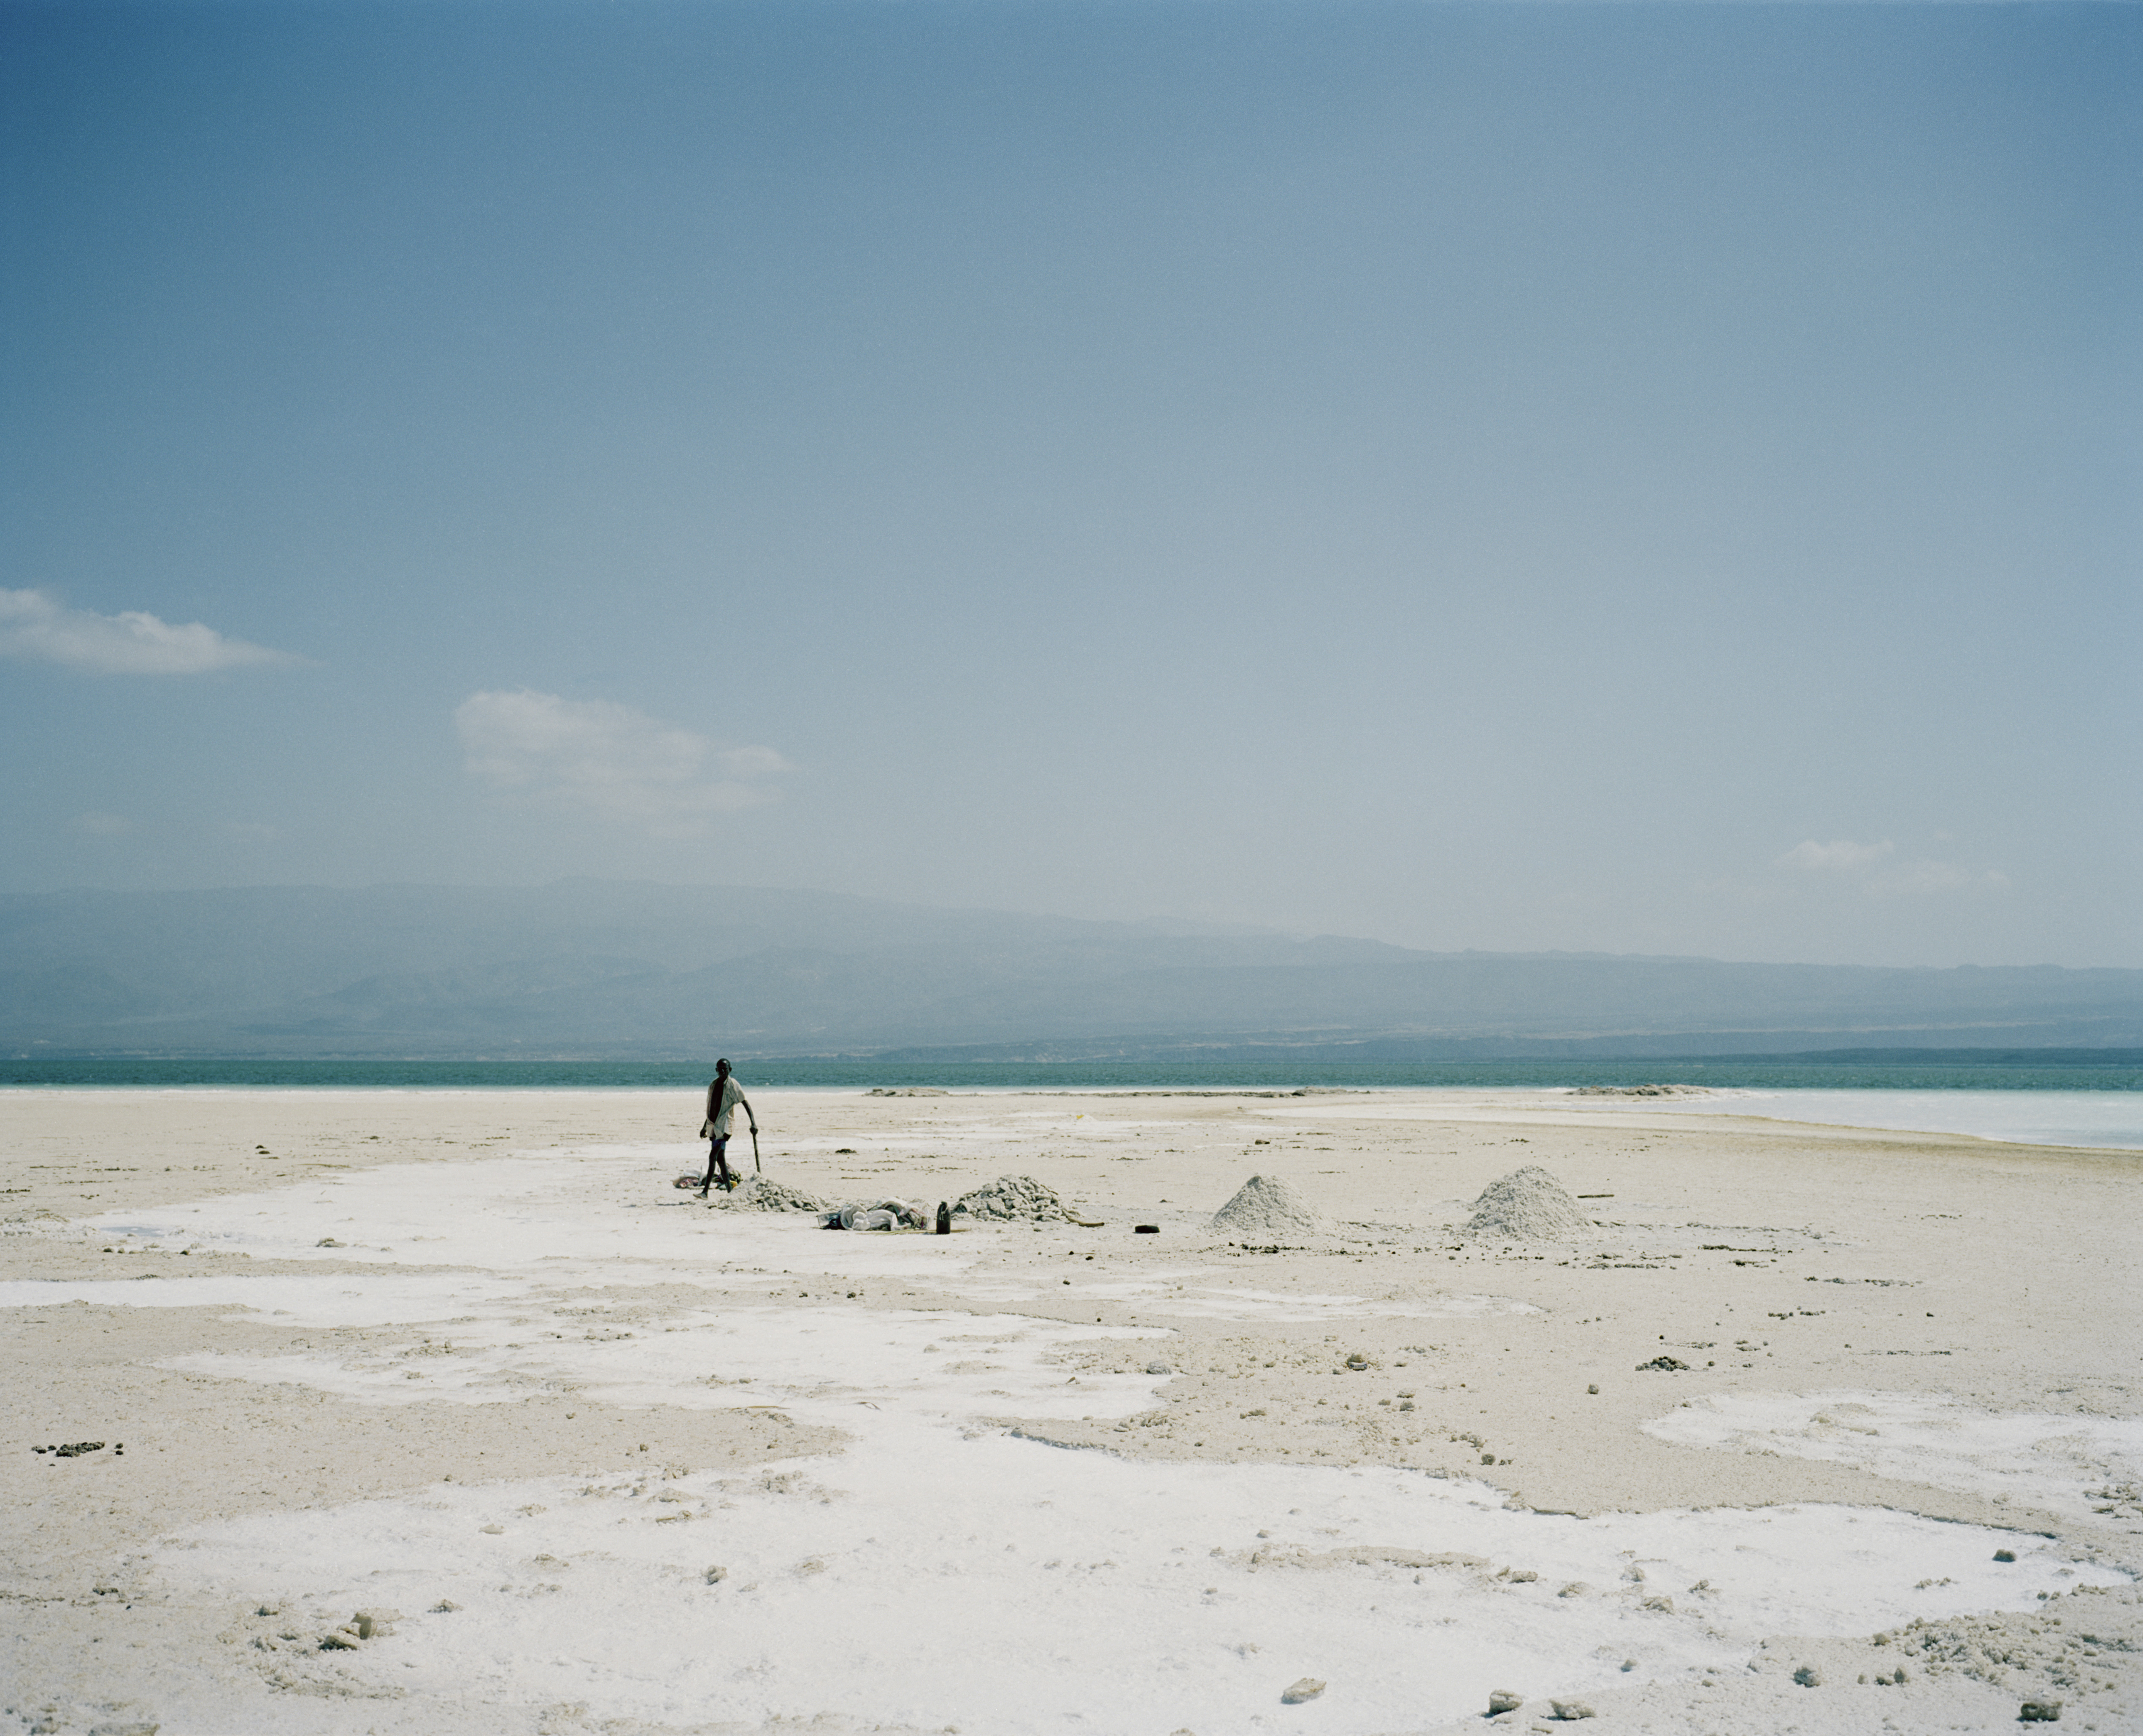 1. Armin Linke, Lake Assal, extraction of salt, Djibouti, Africa, 2012. Courtesy Armin Linke and Vistamare / Vistamarestudio, Pescara / Milano.